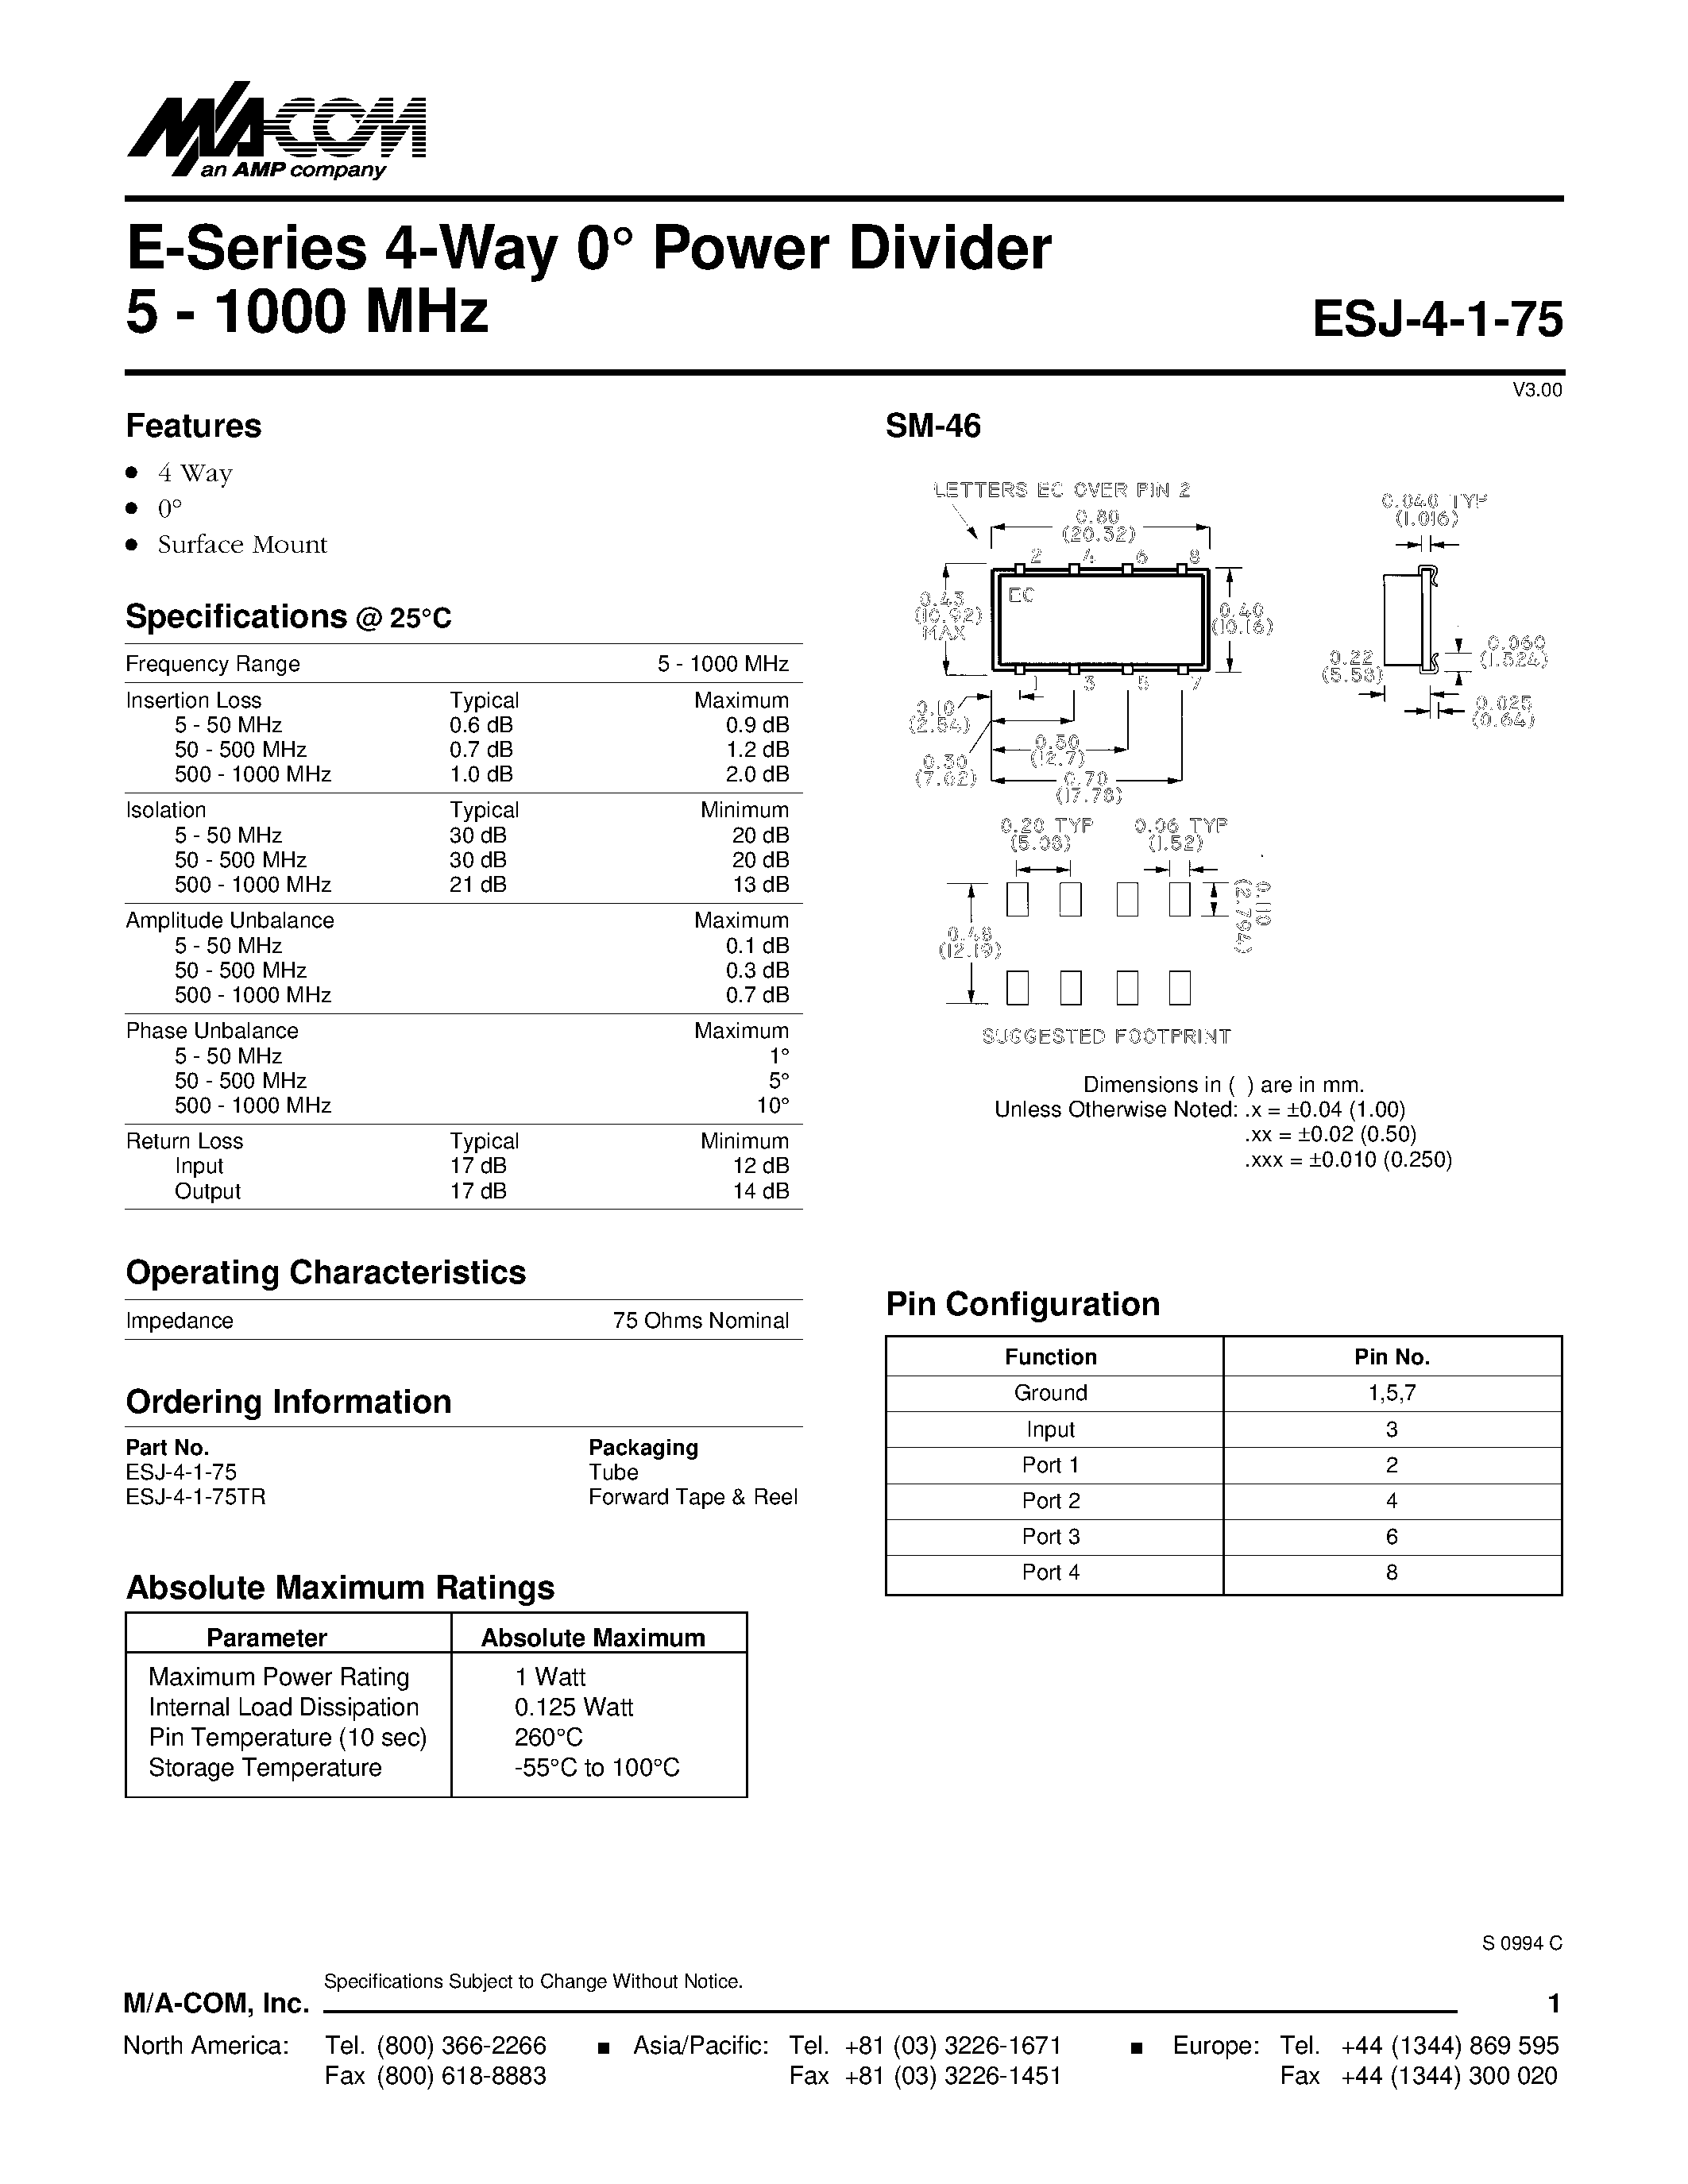 Datasheet ESJ-4-1-75 - E-Series 4-Way 0 Power Divider 5 - 1000 MHz page 1